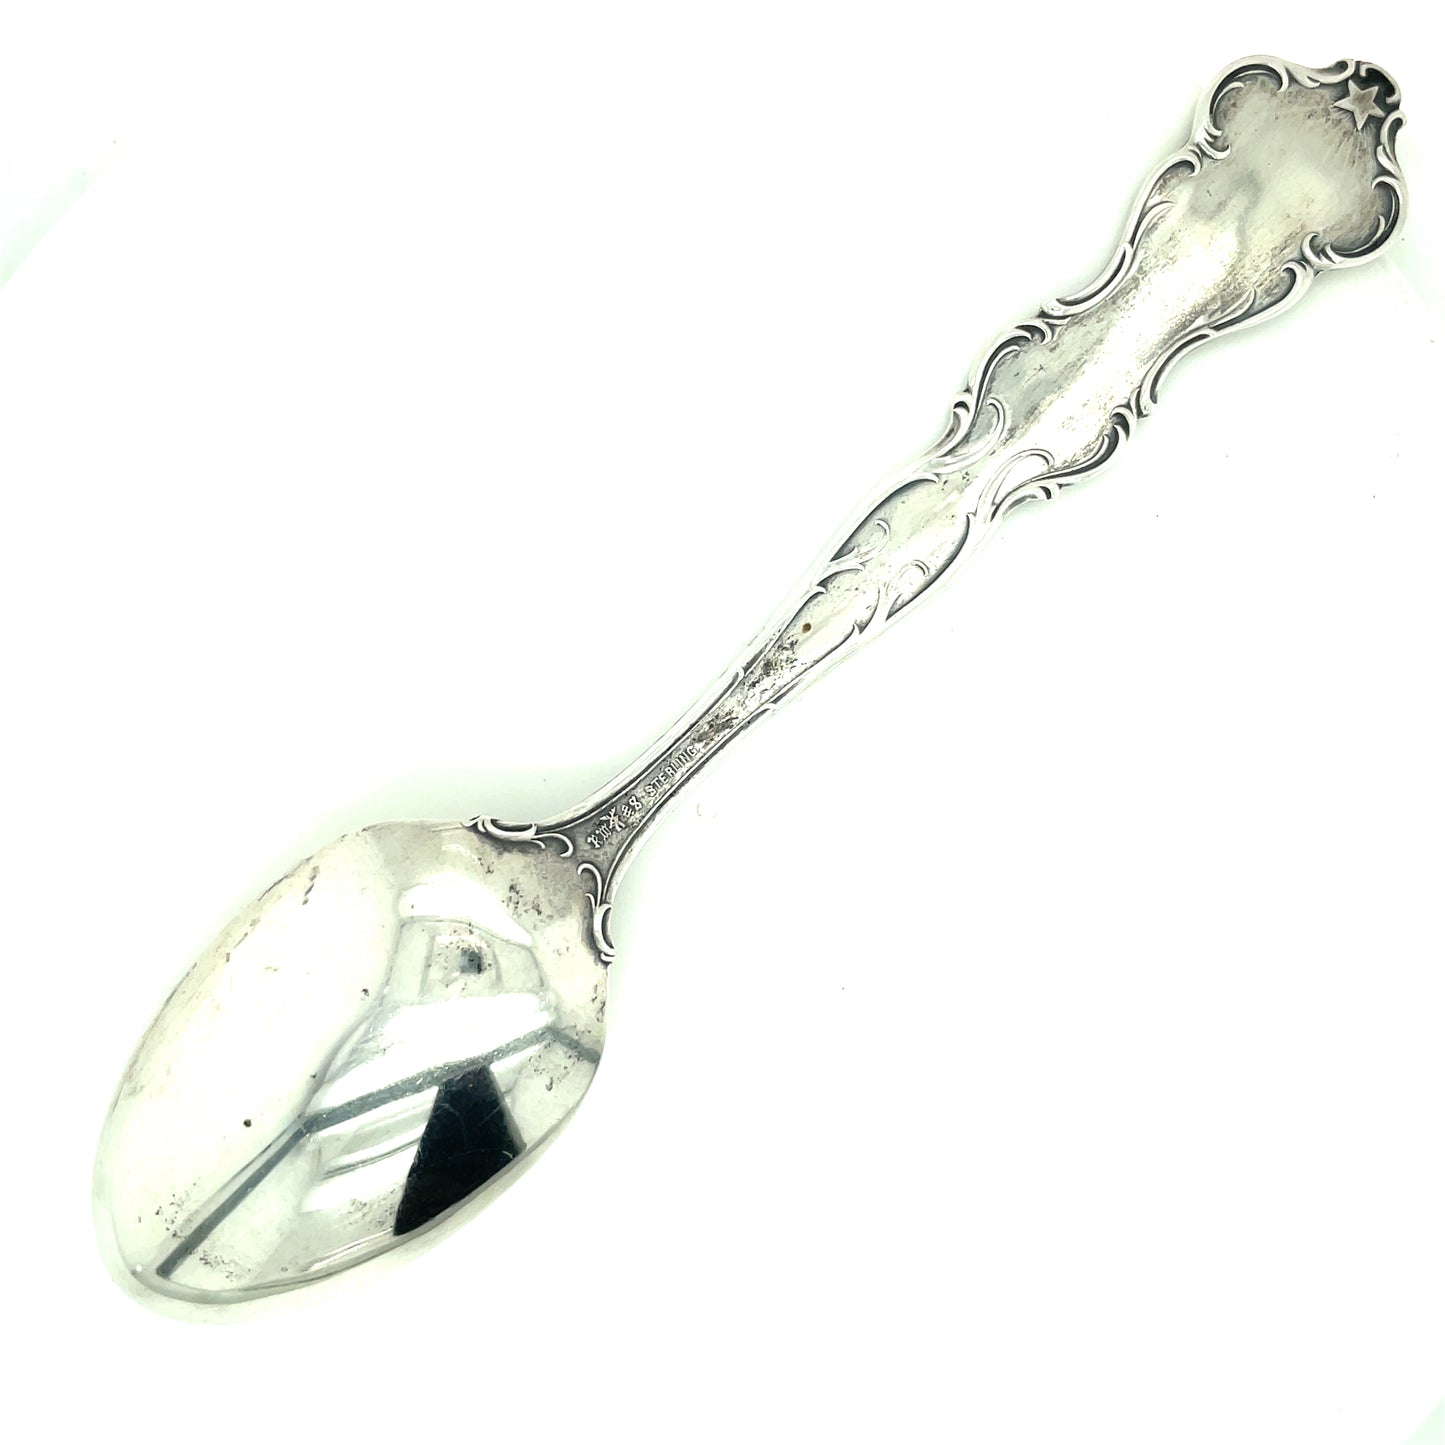 Vintage R. Wallace & Sons May Gemini Sterling Silver Spoon No Monogram